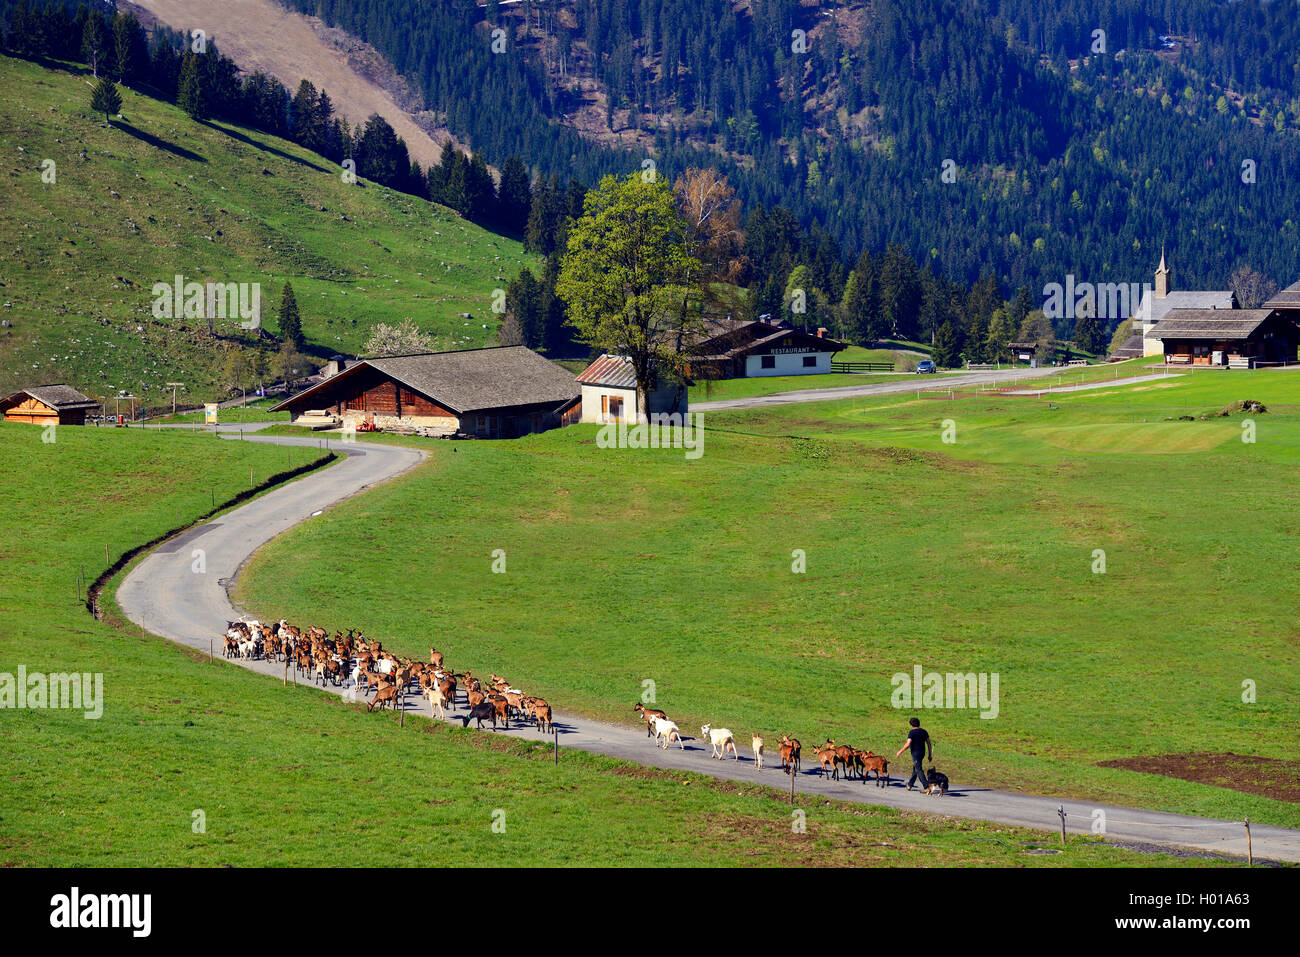 Die Ziege (Capra Hircus, Capra aegagrus f. hircus), Herde von Ziegen auf Mountain Road, Frankreich, Haute-Savoie, La Clusaz Stockfoto